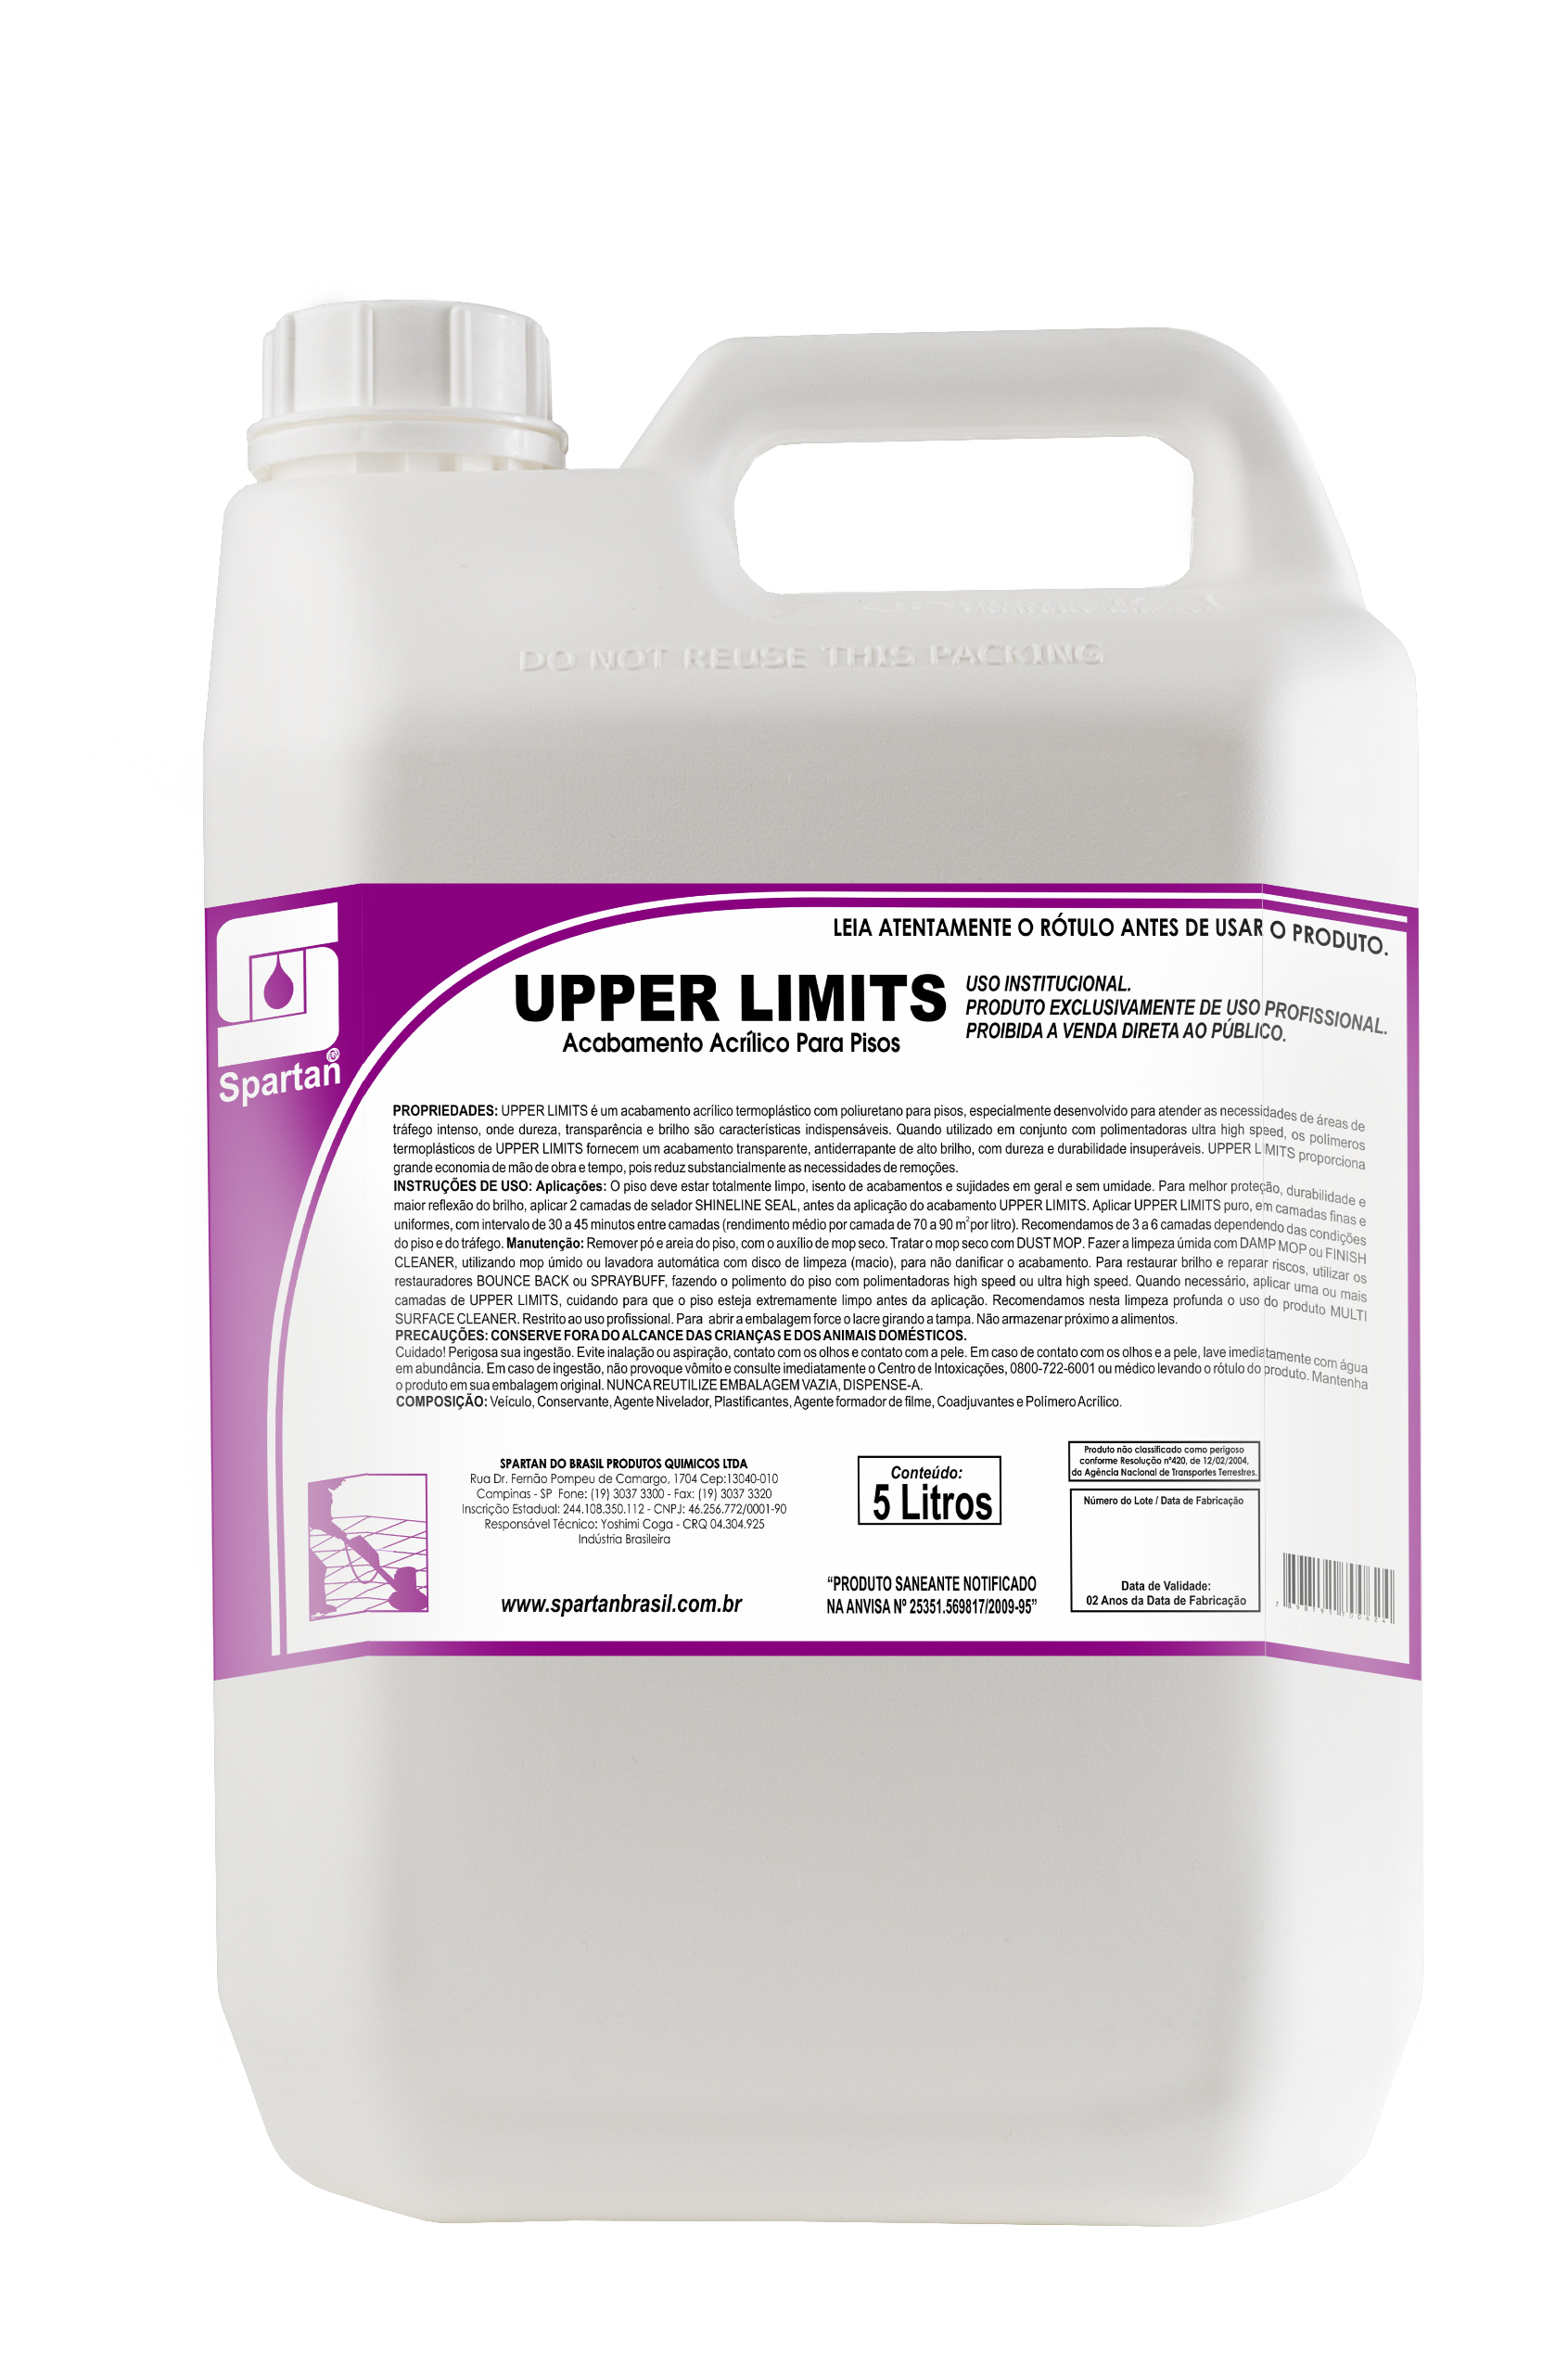 Imagem ilustrativa do produto: Upper Limits